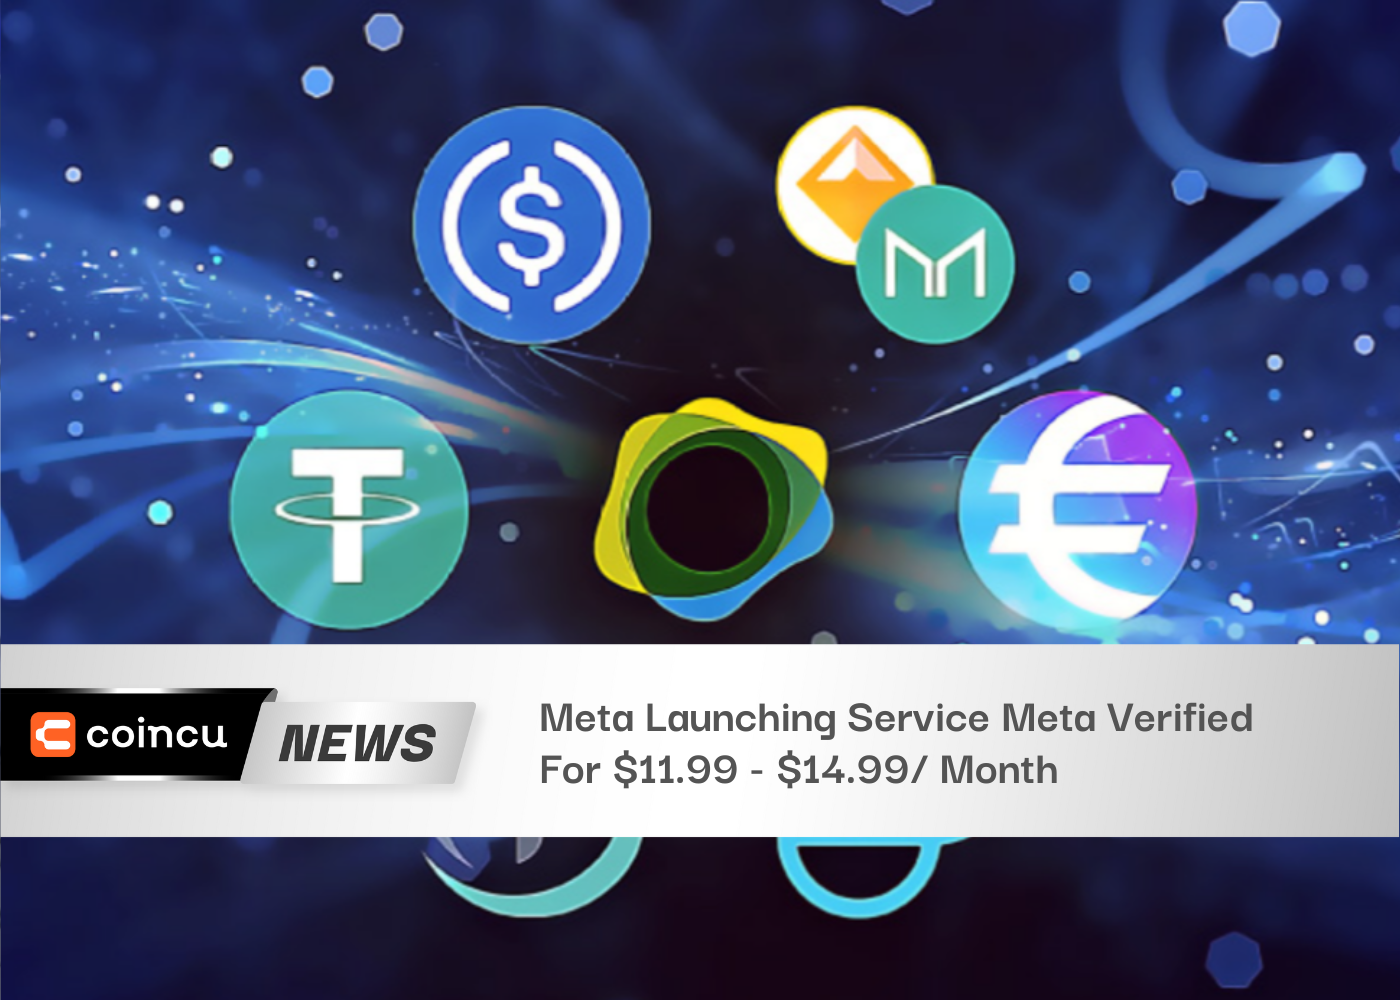 Meta Launching Service Meta Verified For $11.99 - $14.99/ Month